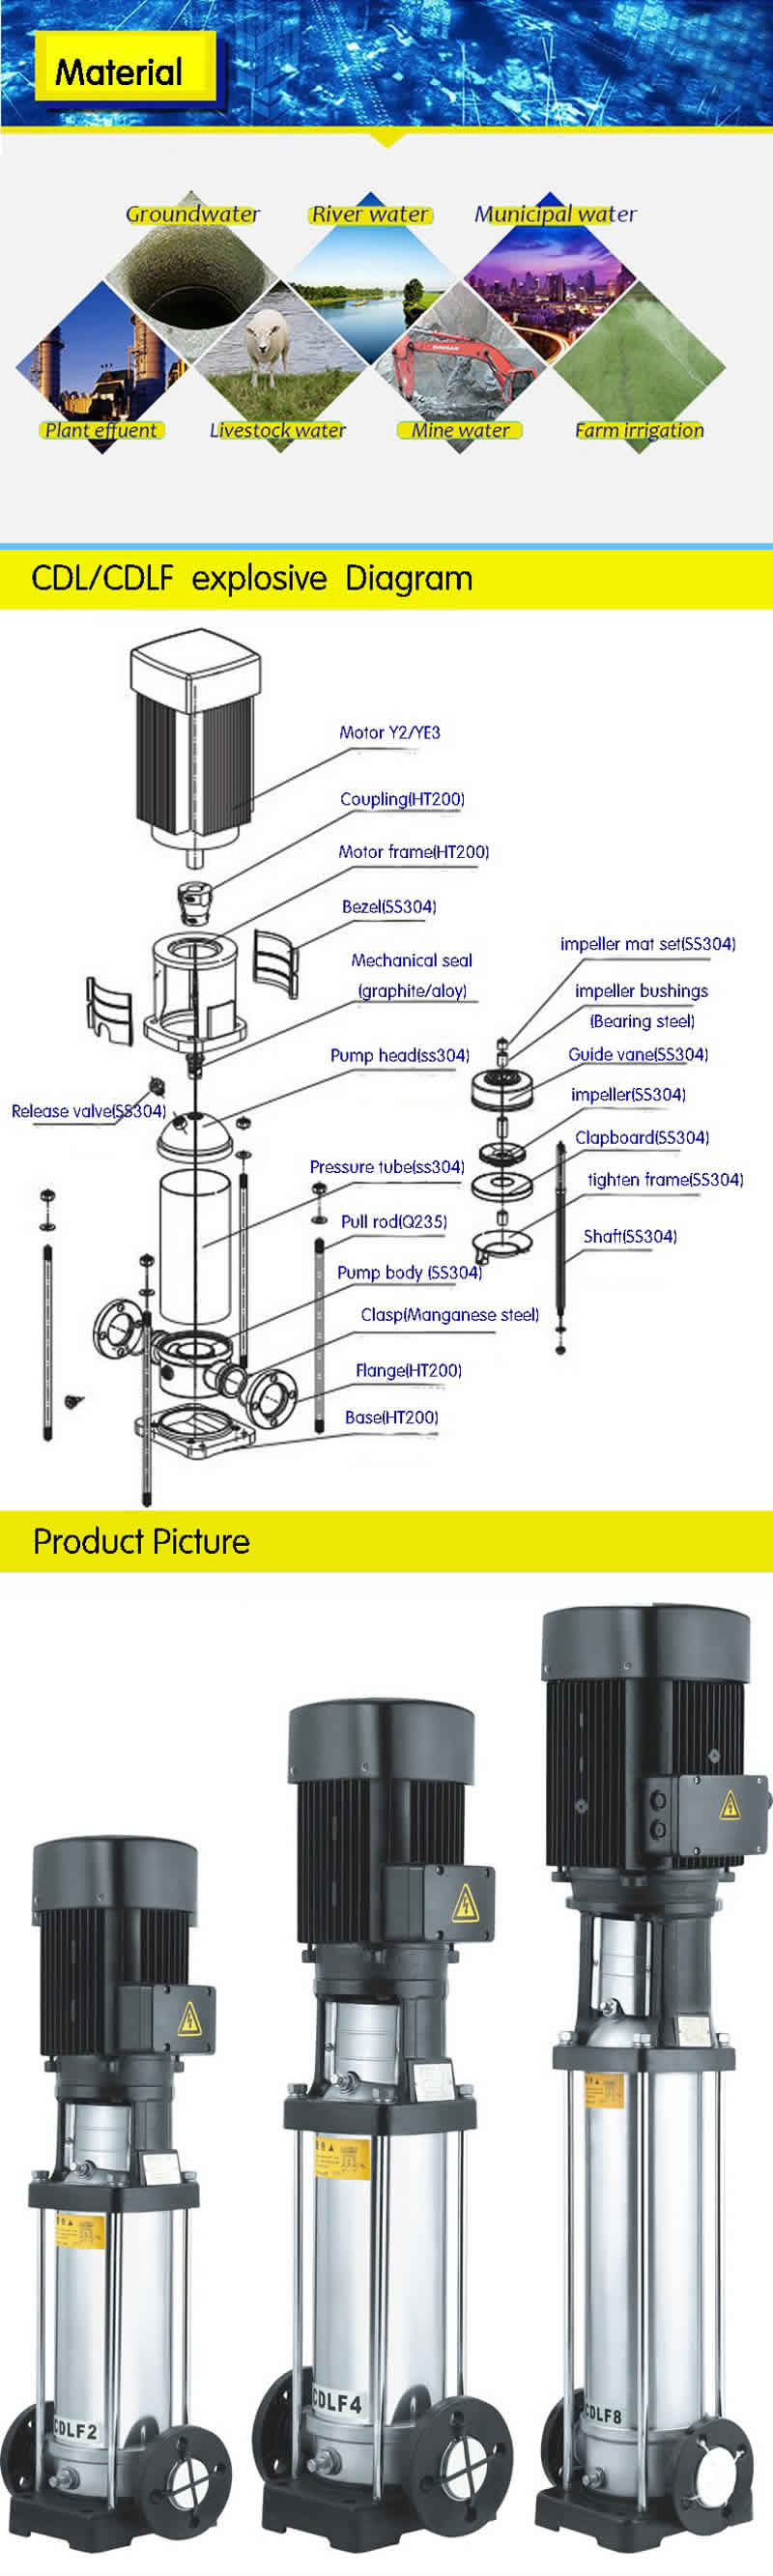 Vertical stainless steel multistage pump